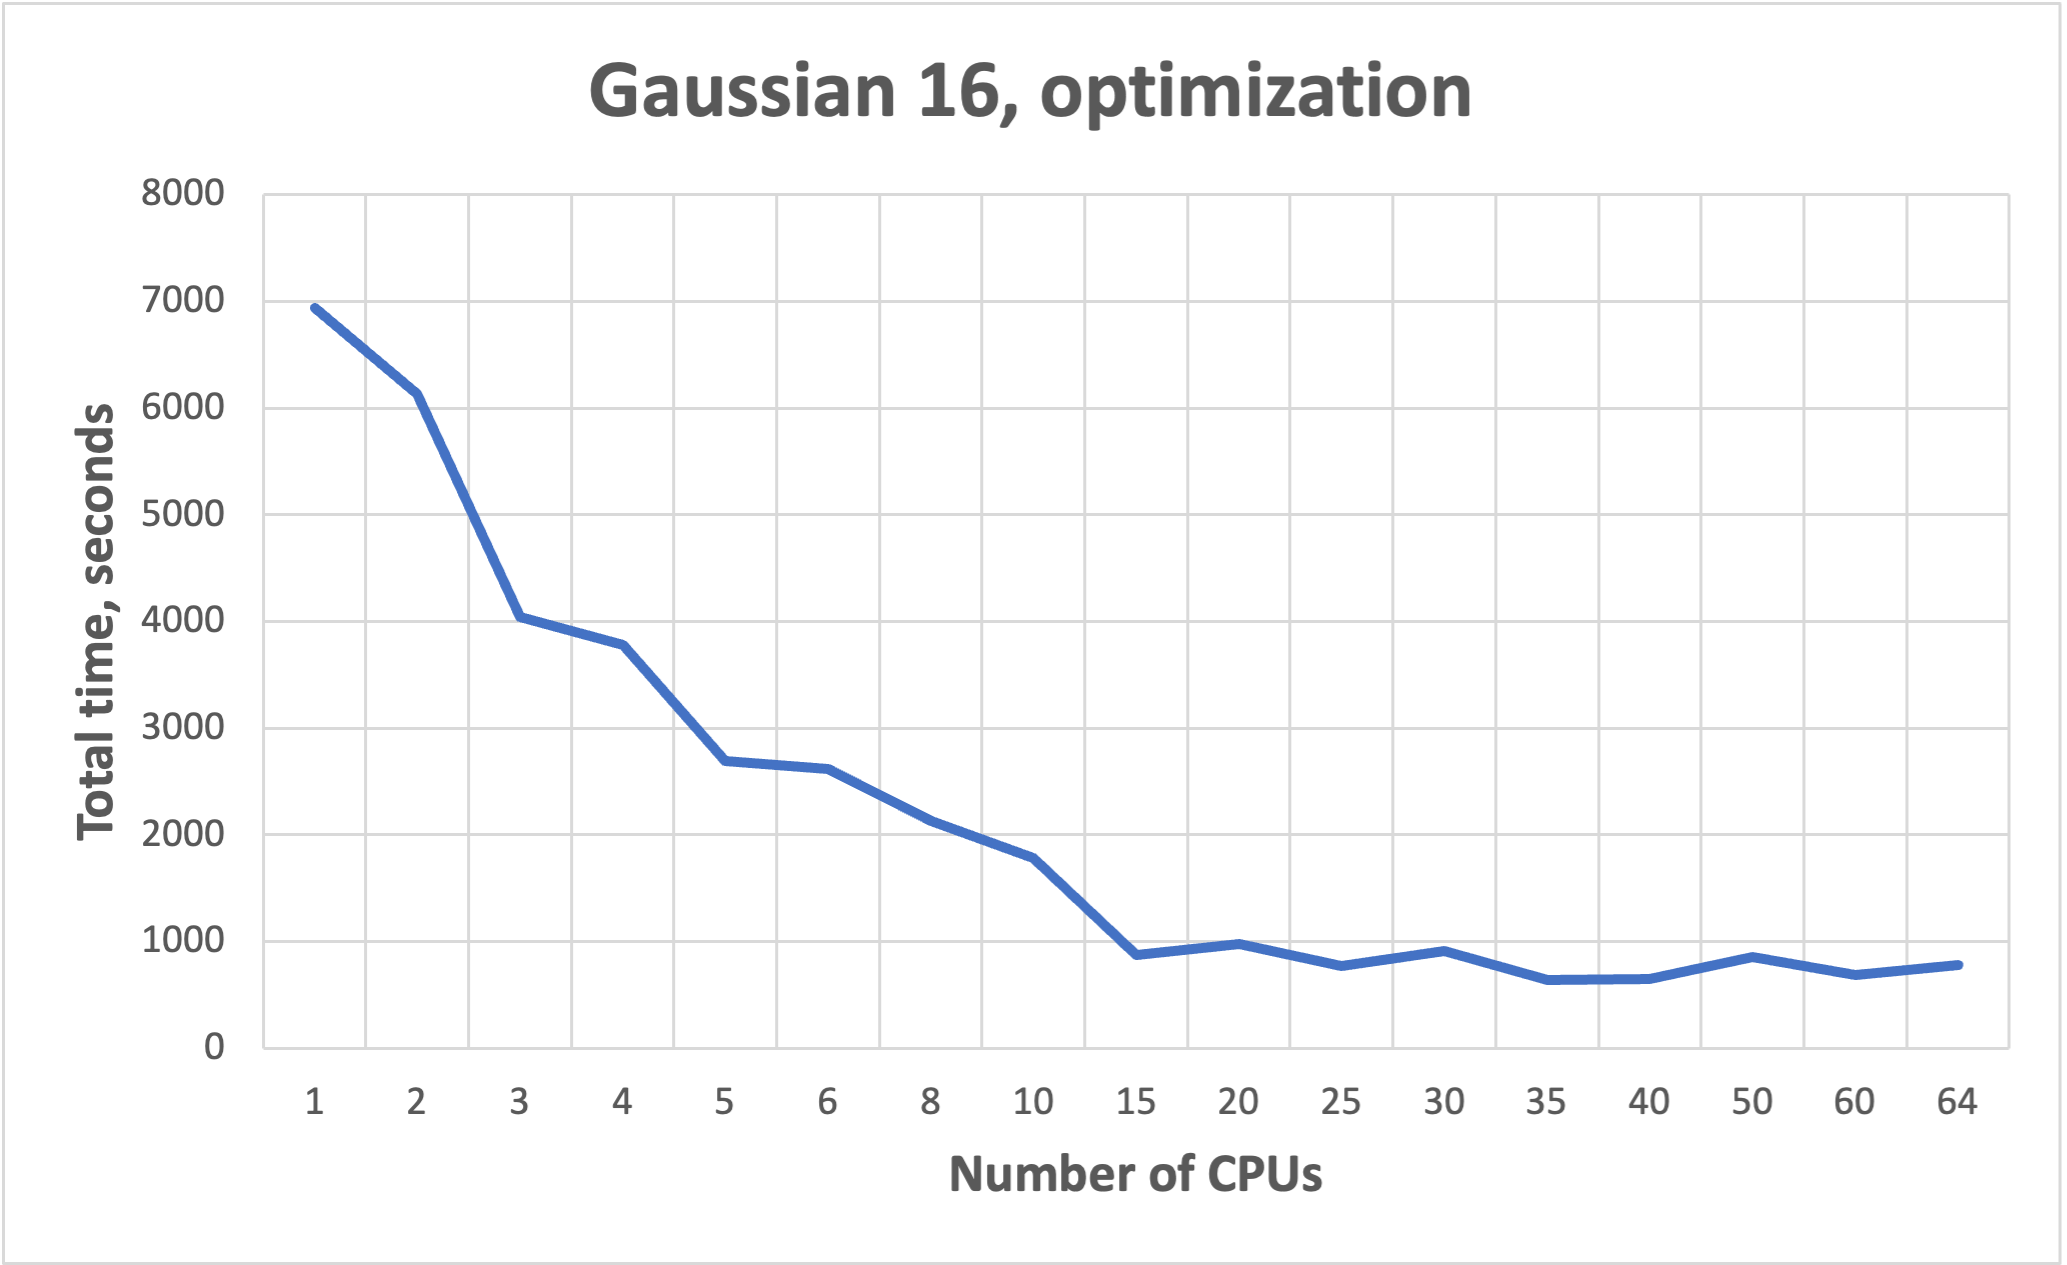 20 Gaussian cores vs SLURM threads